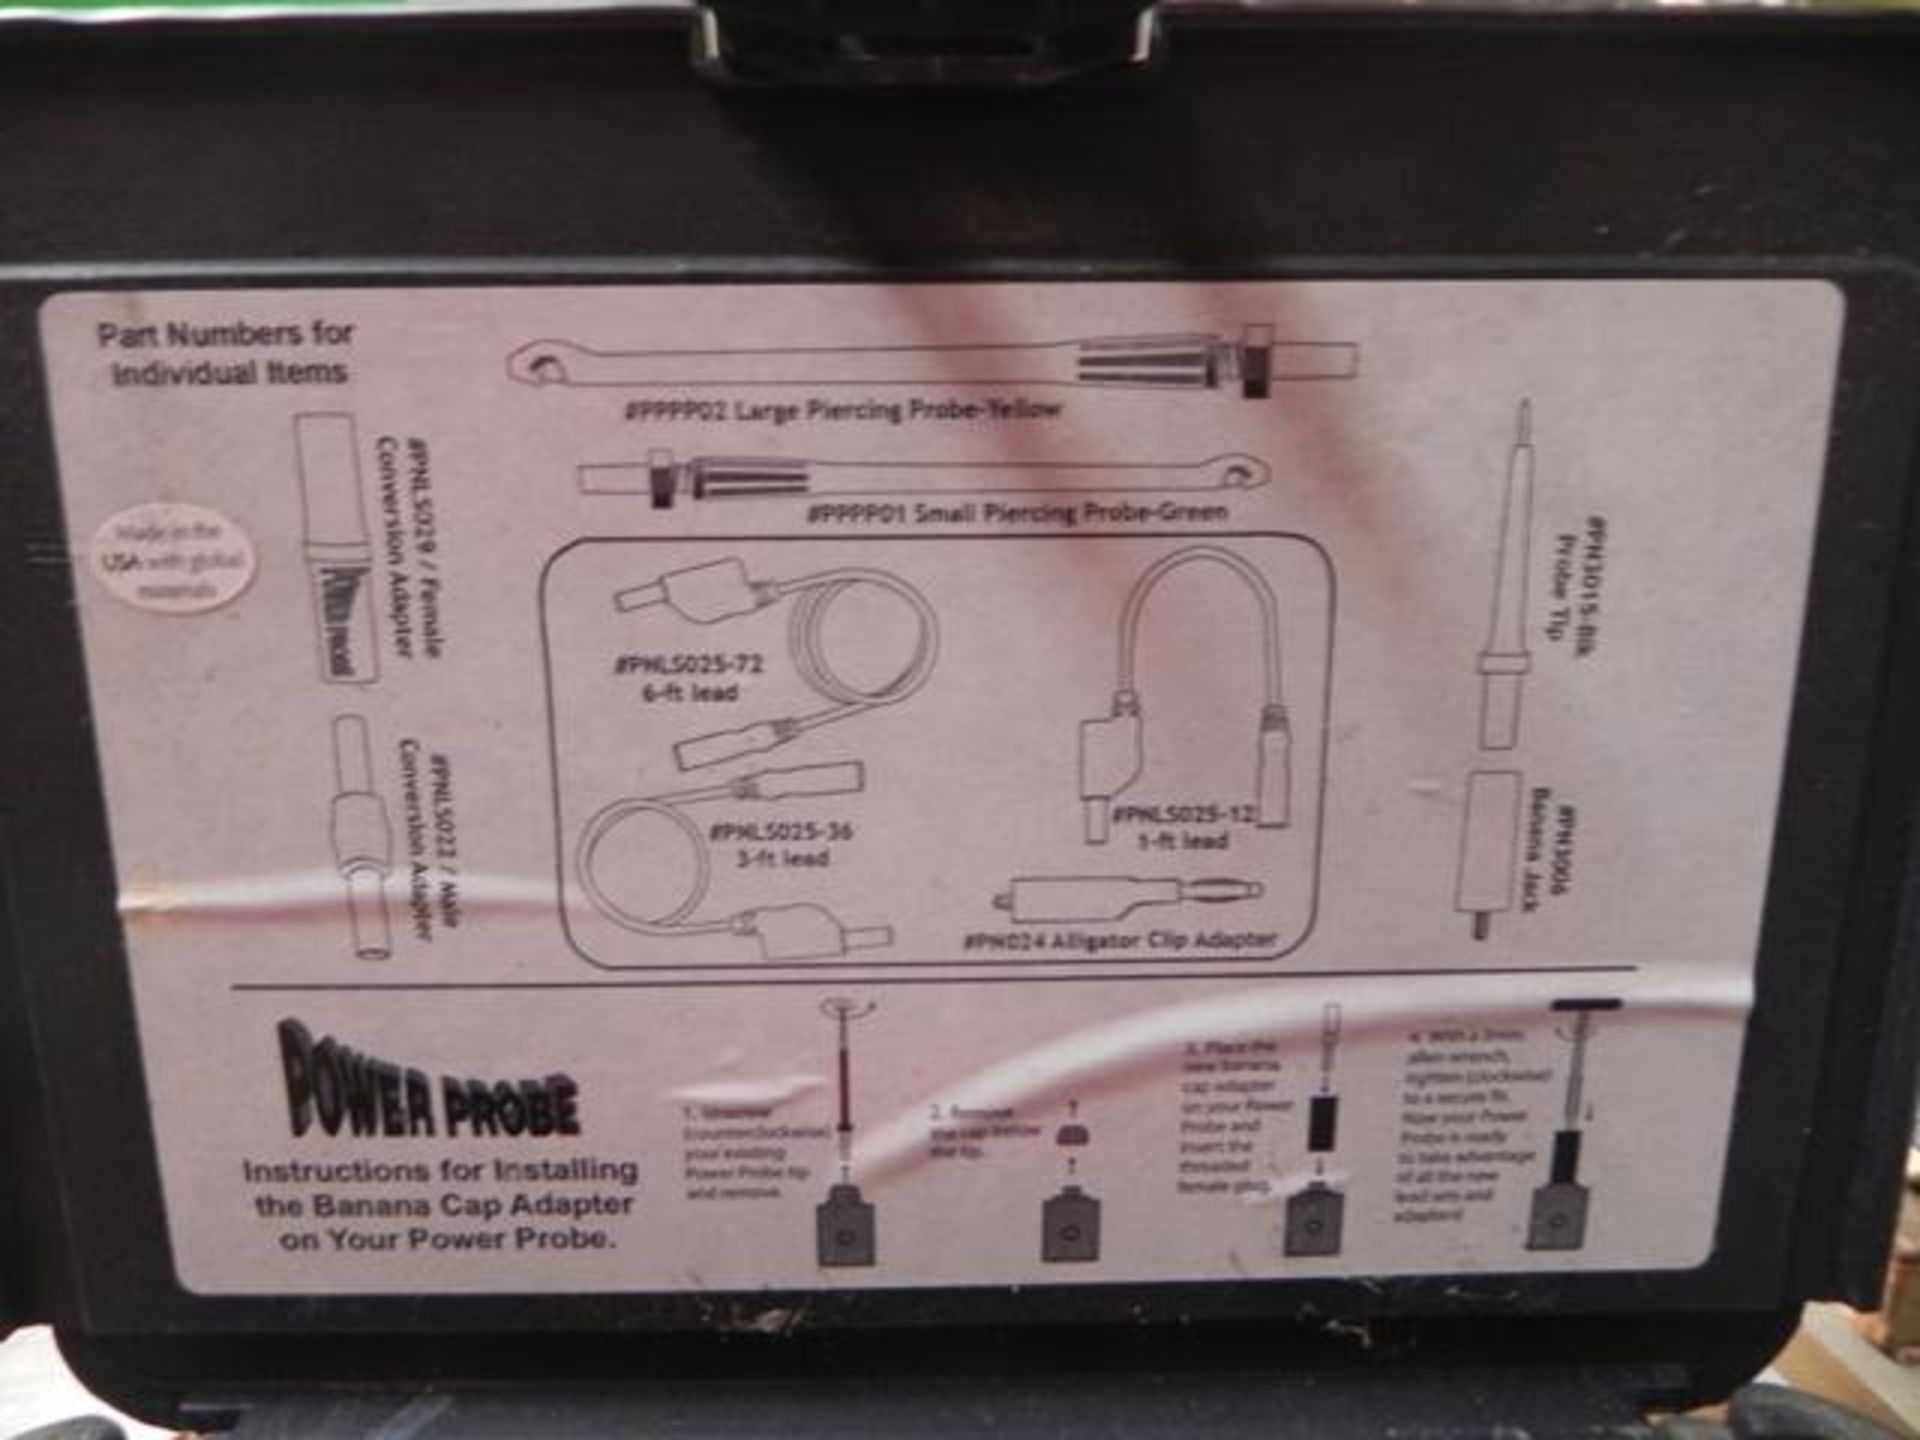 1ea Power Portable Lead set Power Probe mdl - PPL501 1ea Micronta 8-Range Multitasker mdl 22-212 - Image 4 of 6